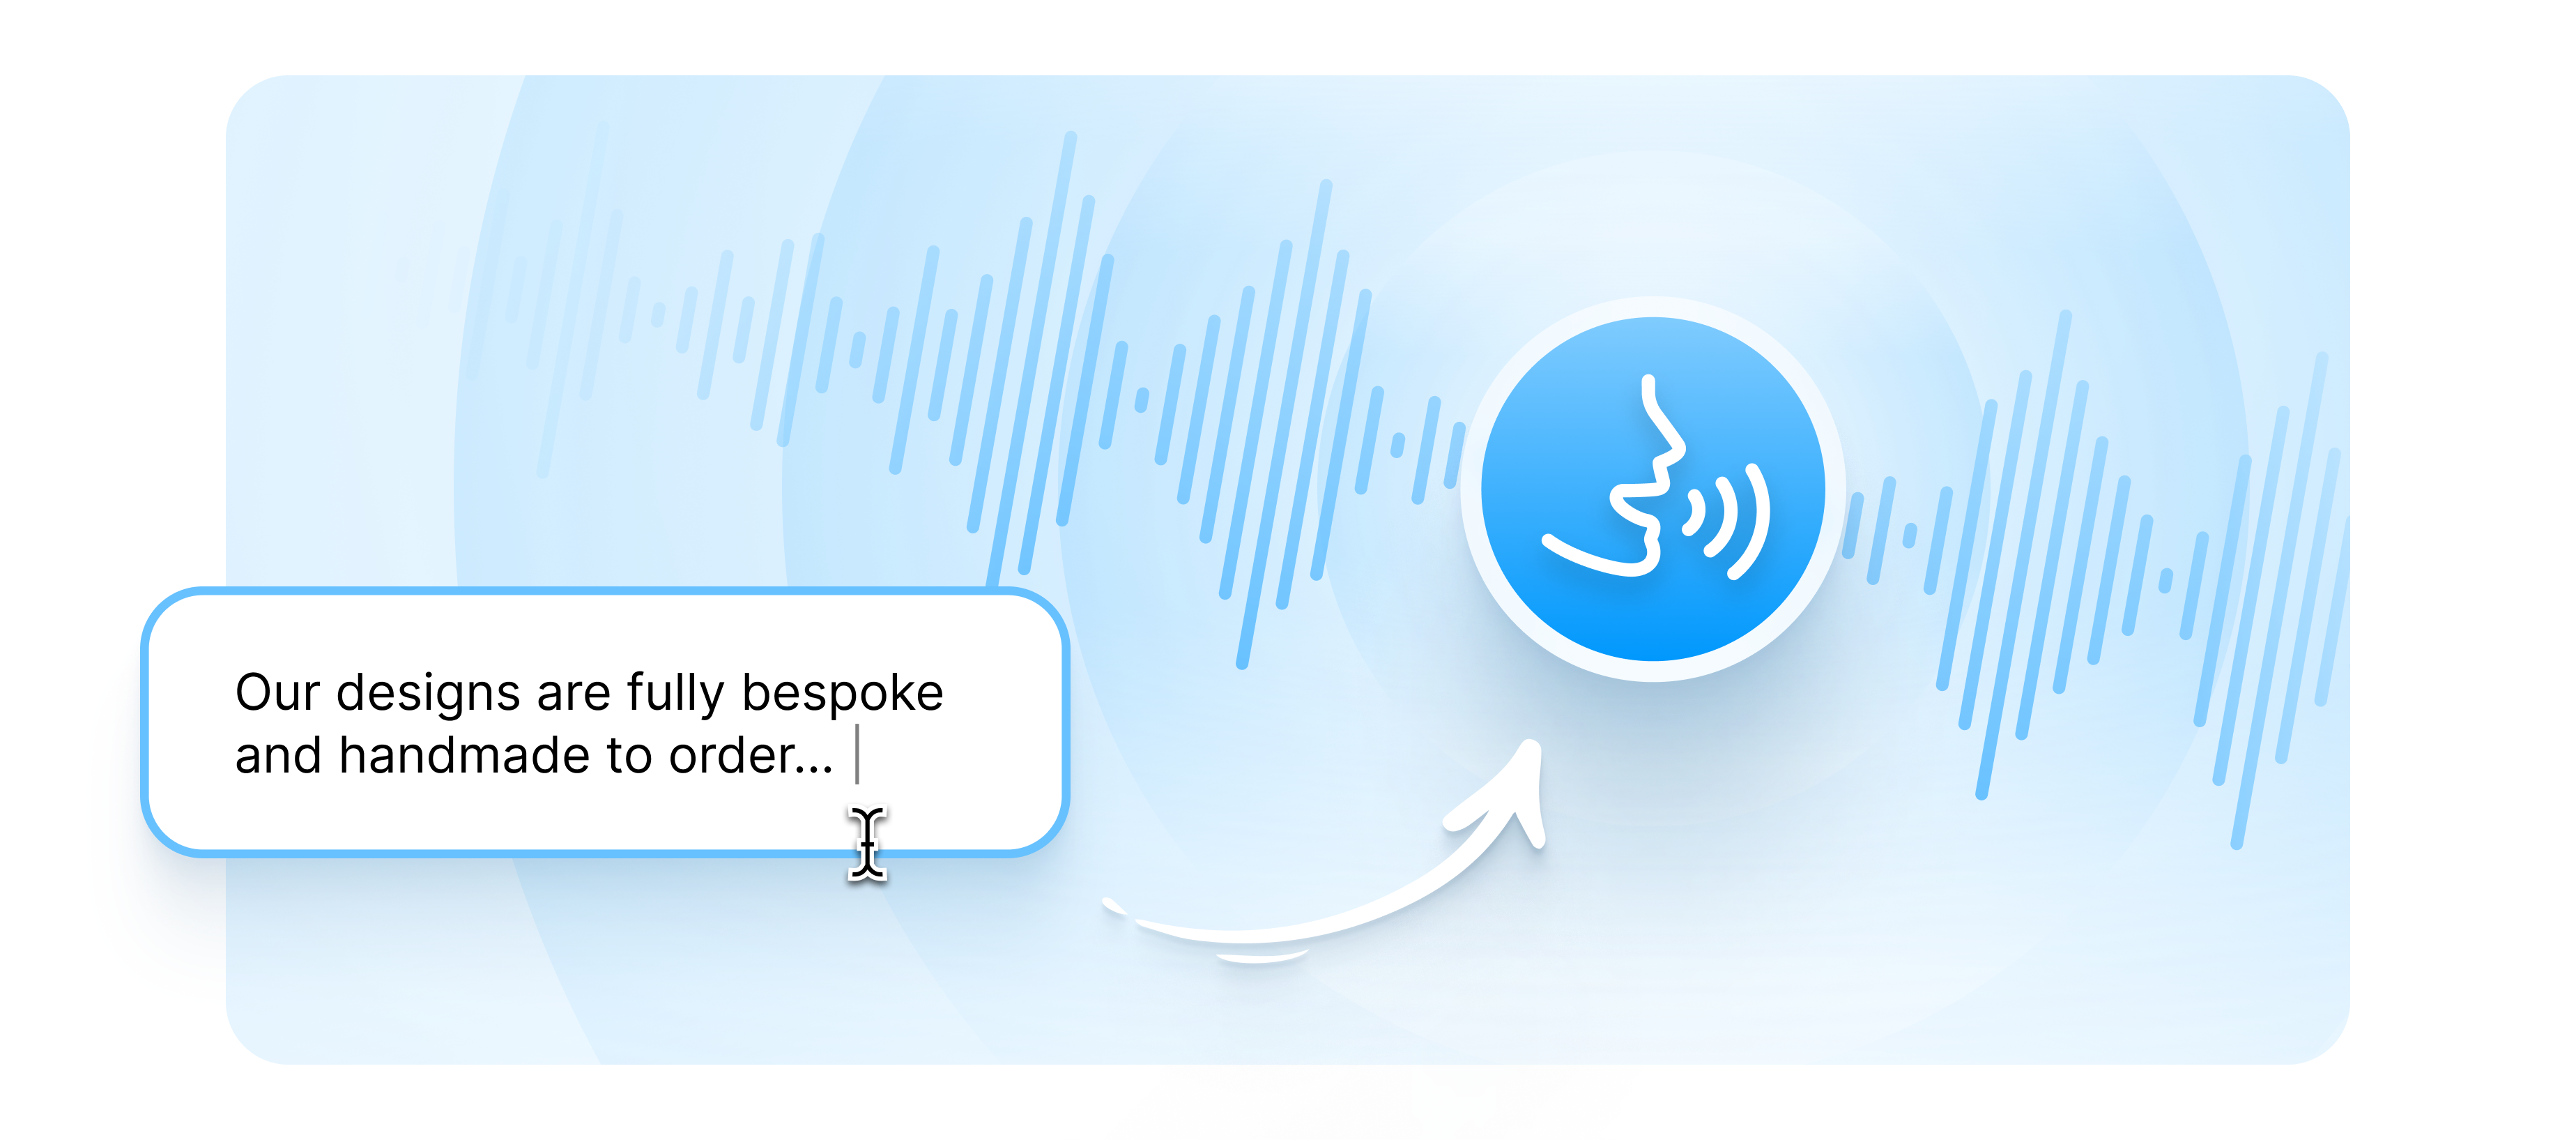 text to speech audio generator